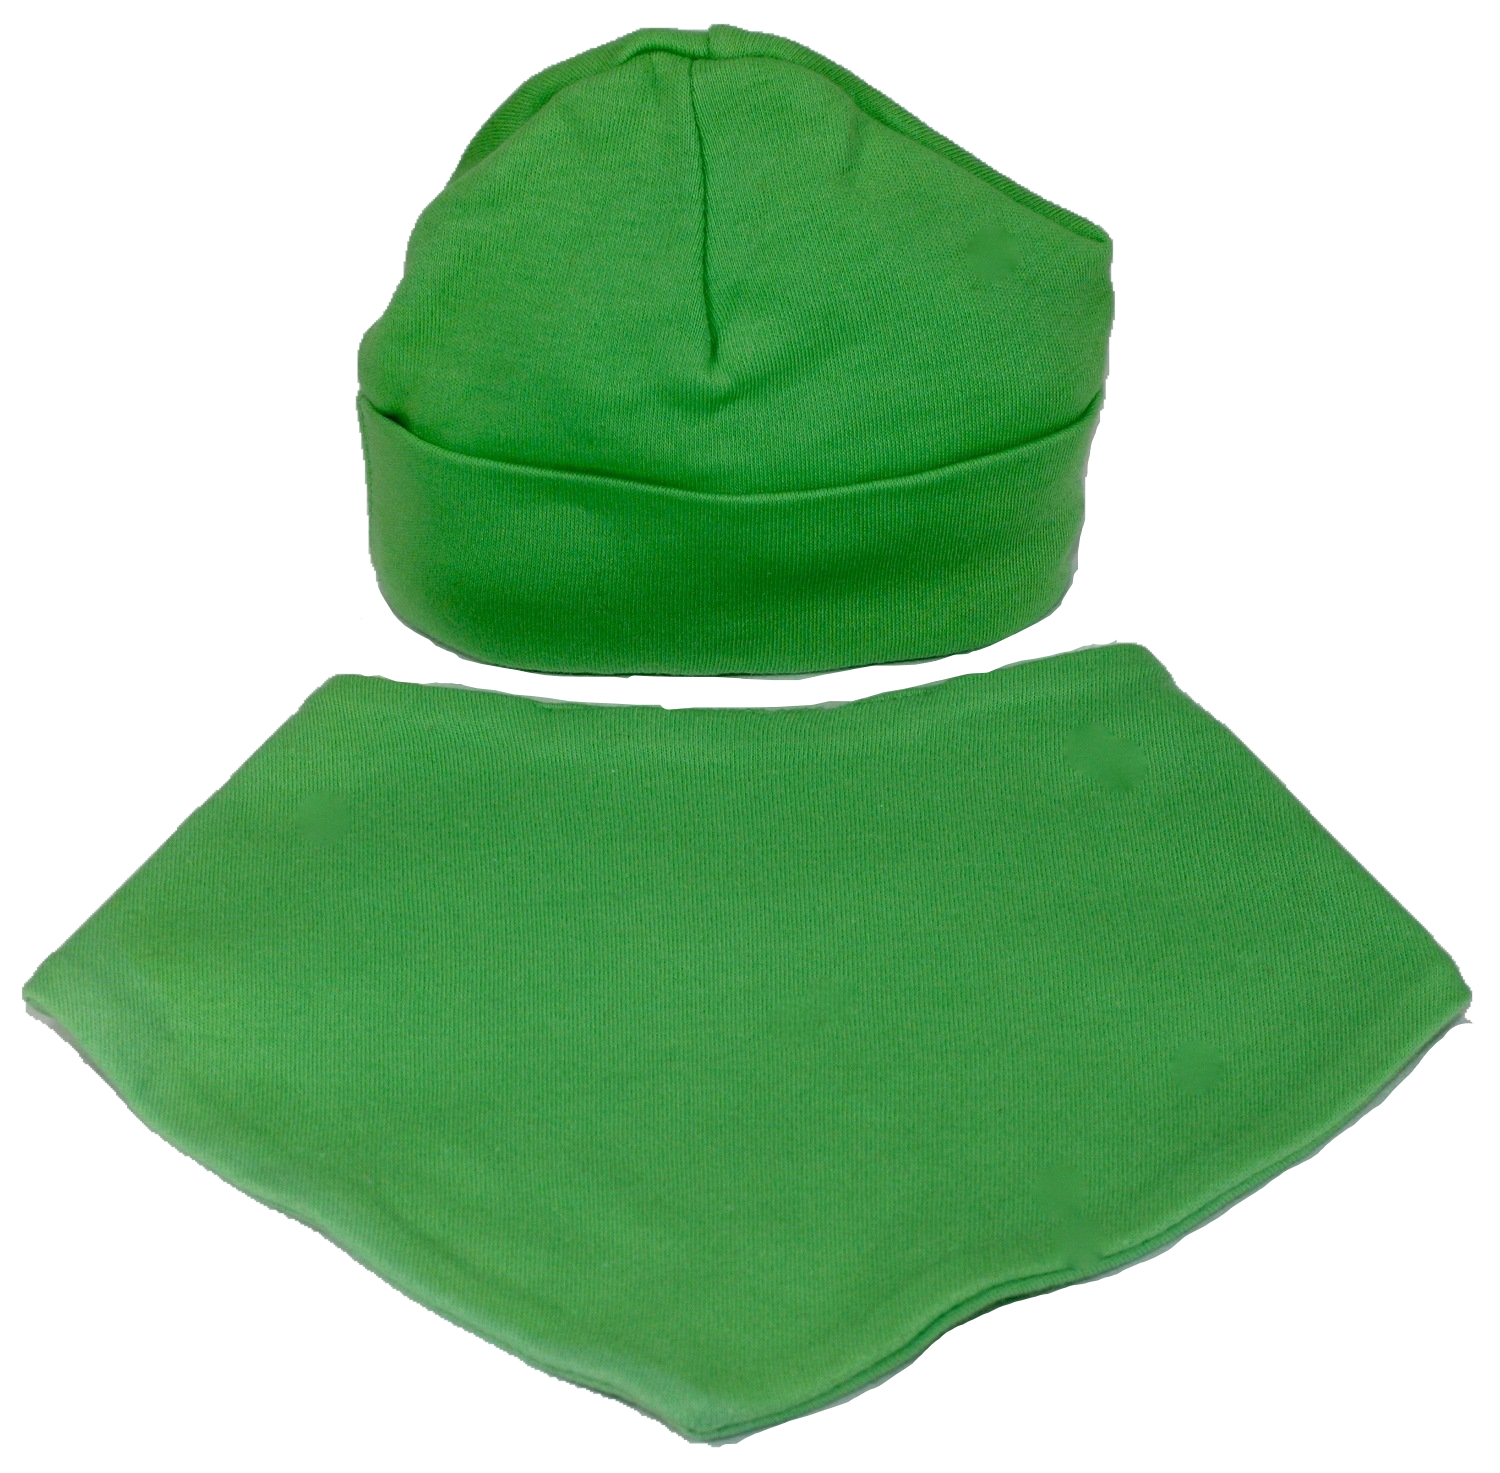 Green hat and bib set